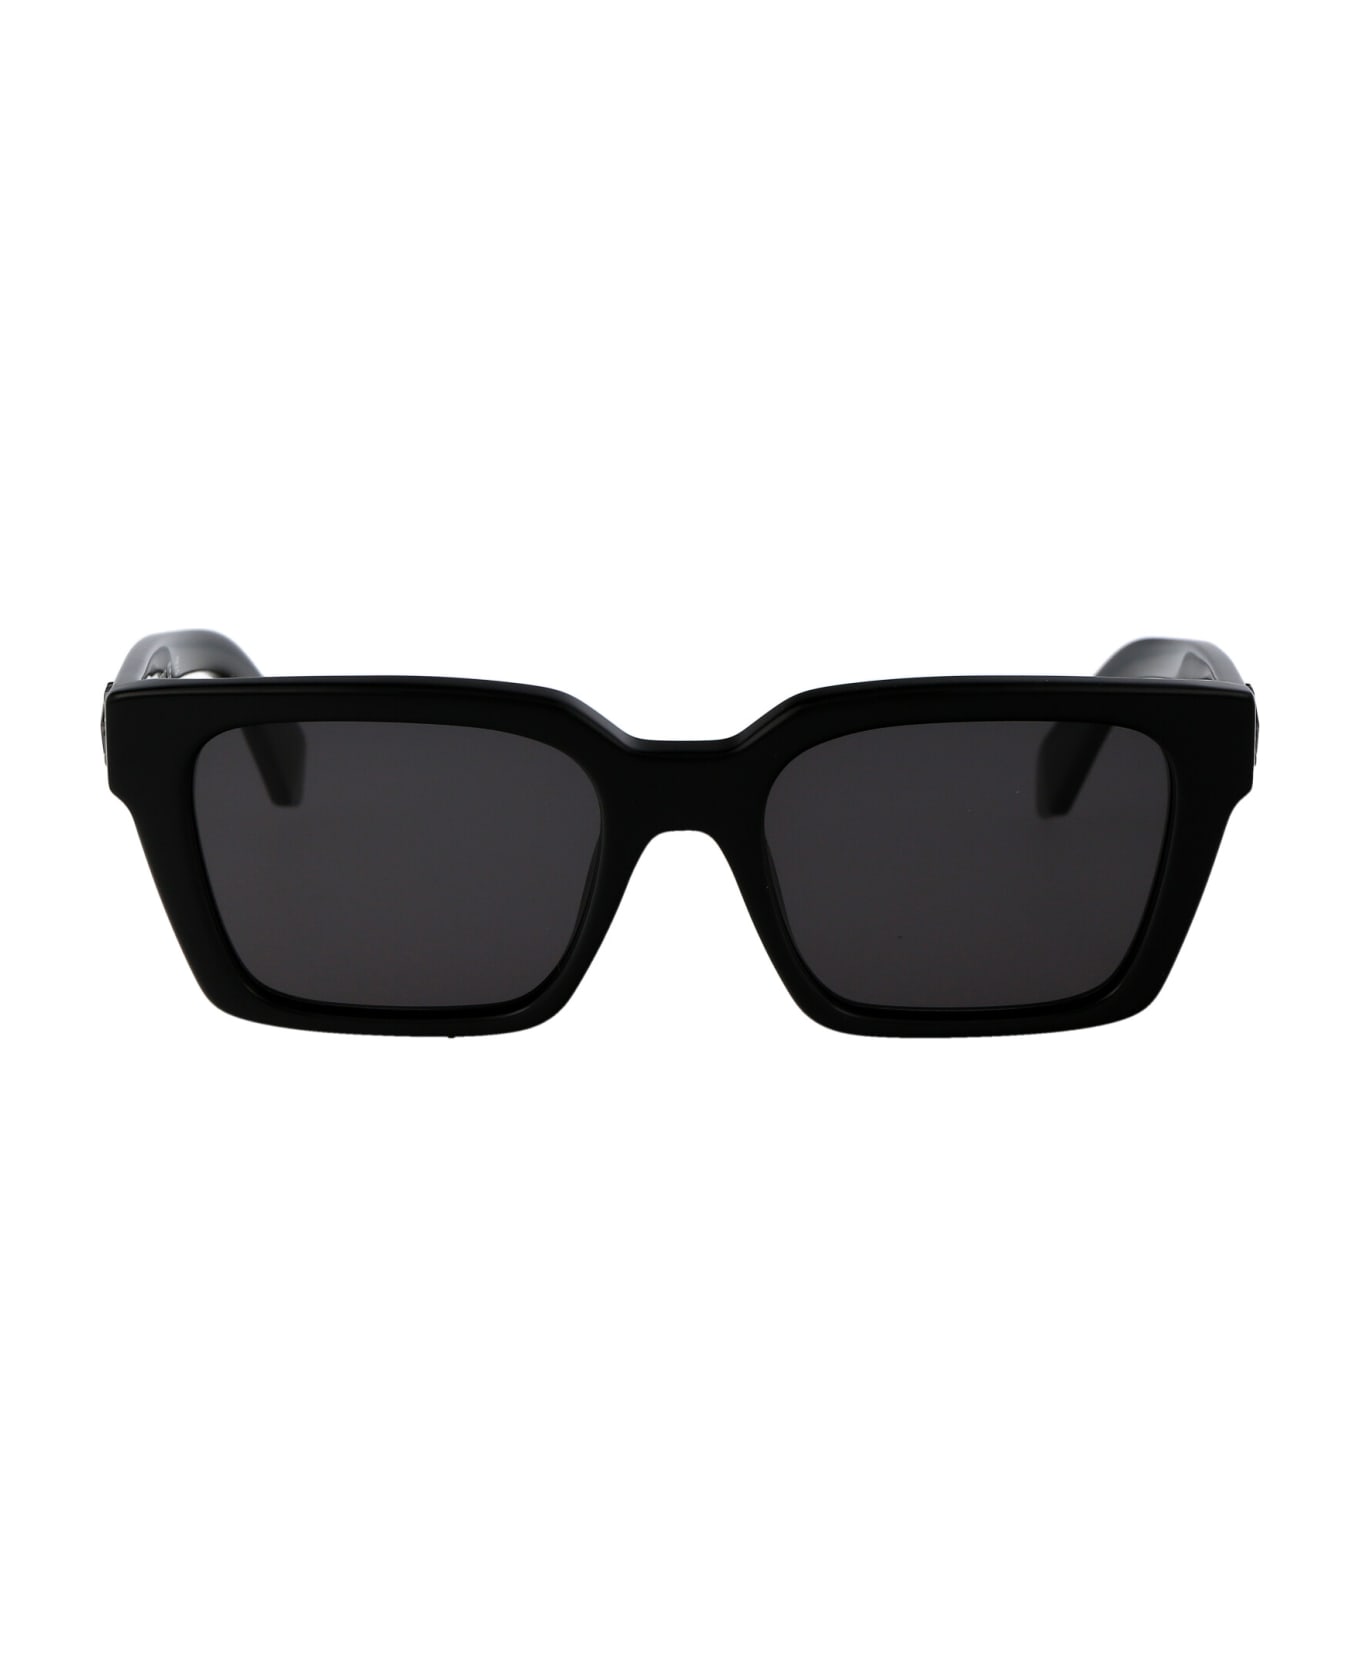 Off-White Branson Sunglasses - 1007 BLACK